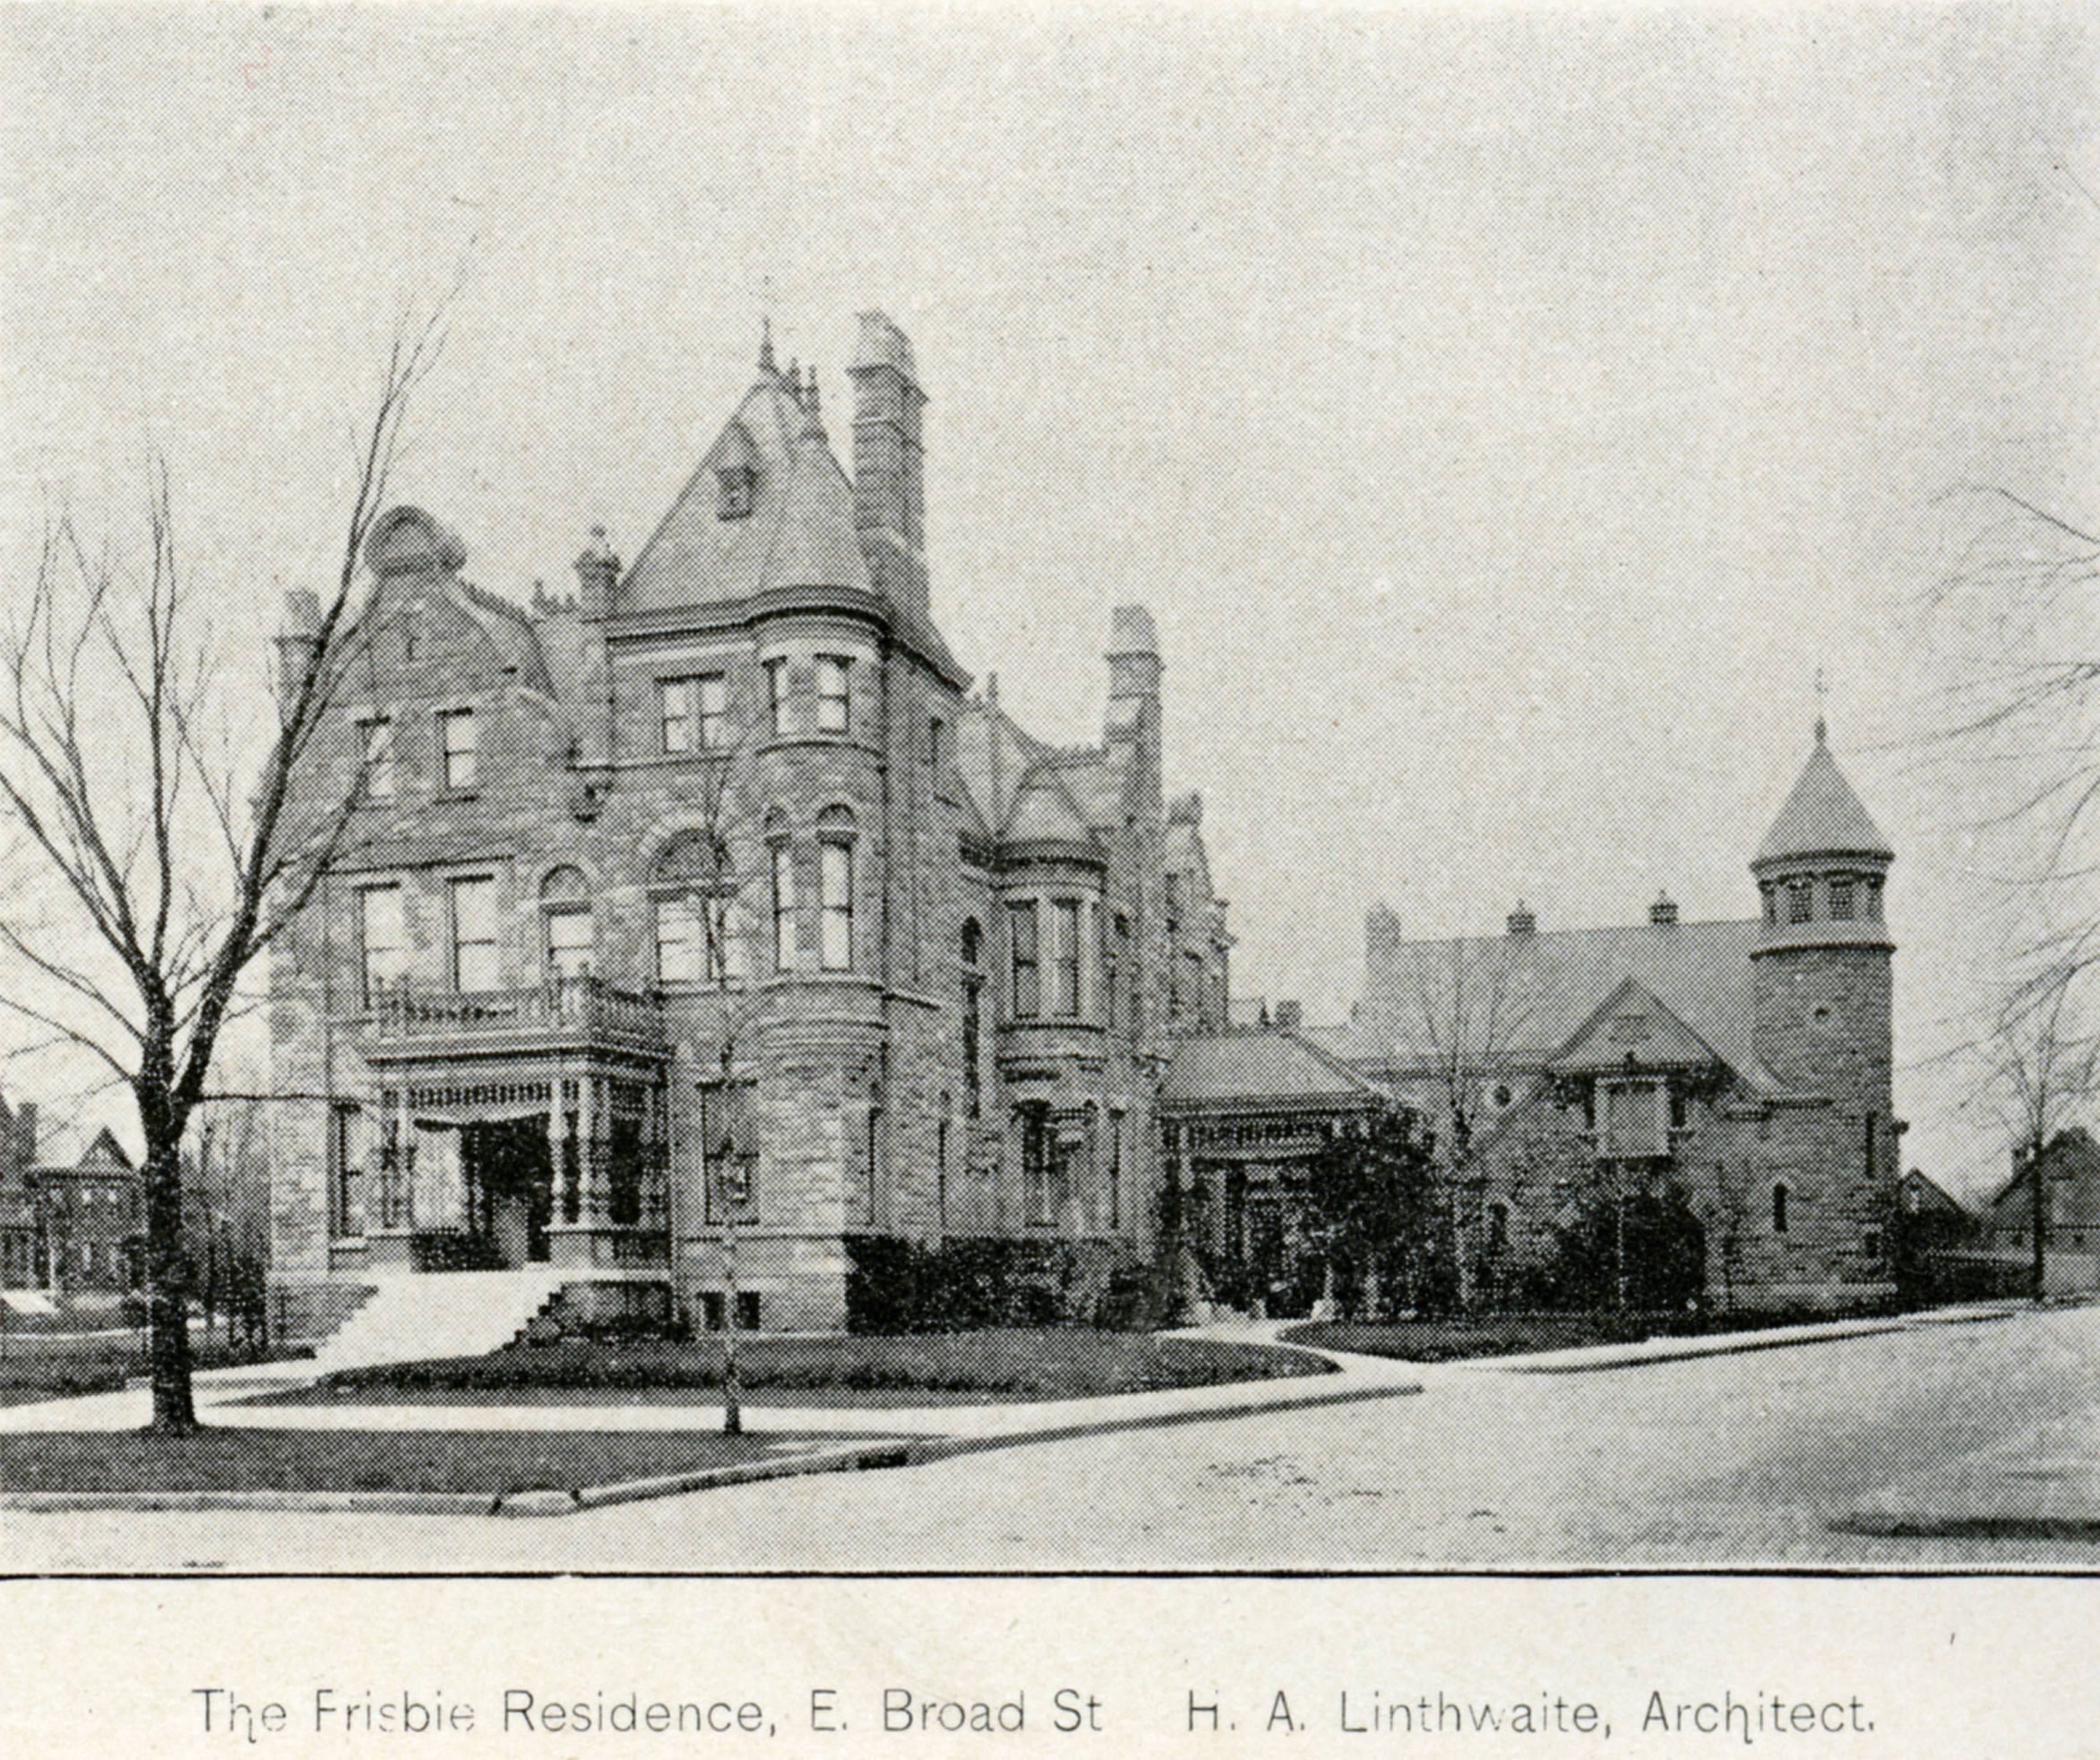 Schumacher Mansion on East Broad Street in Columbus, circa 1897